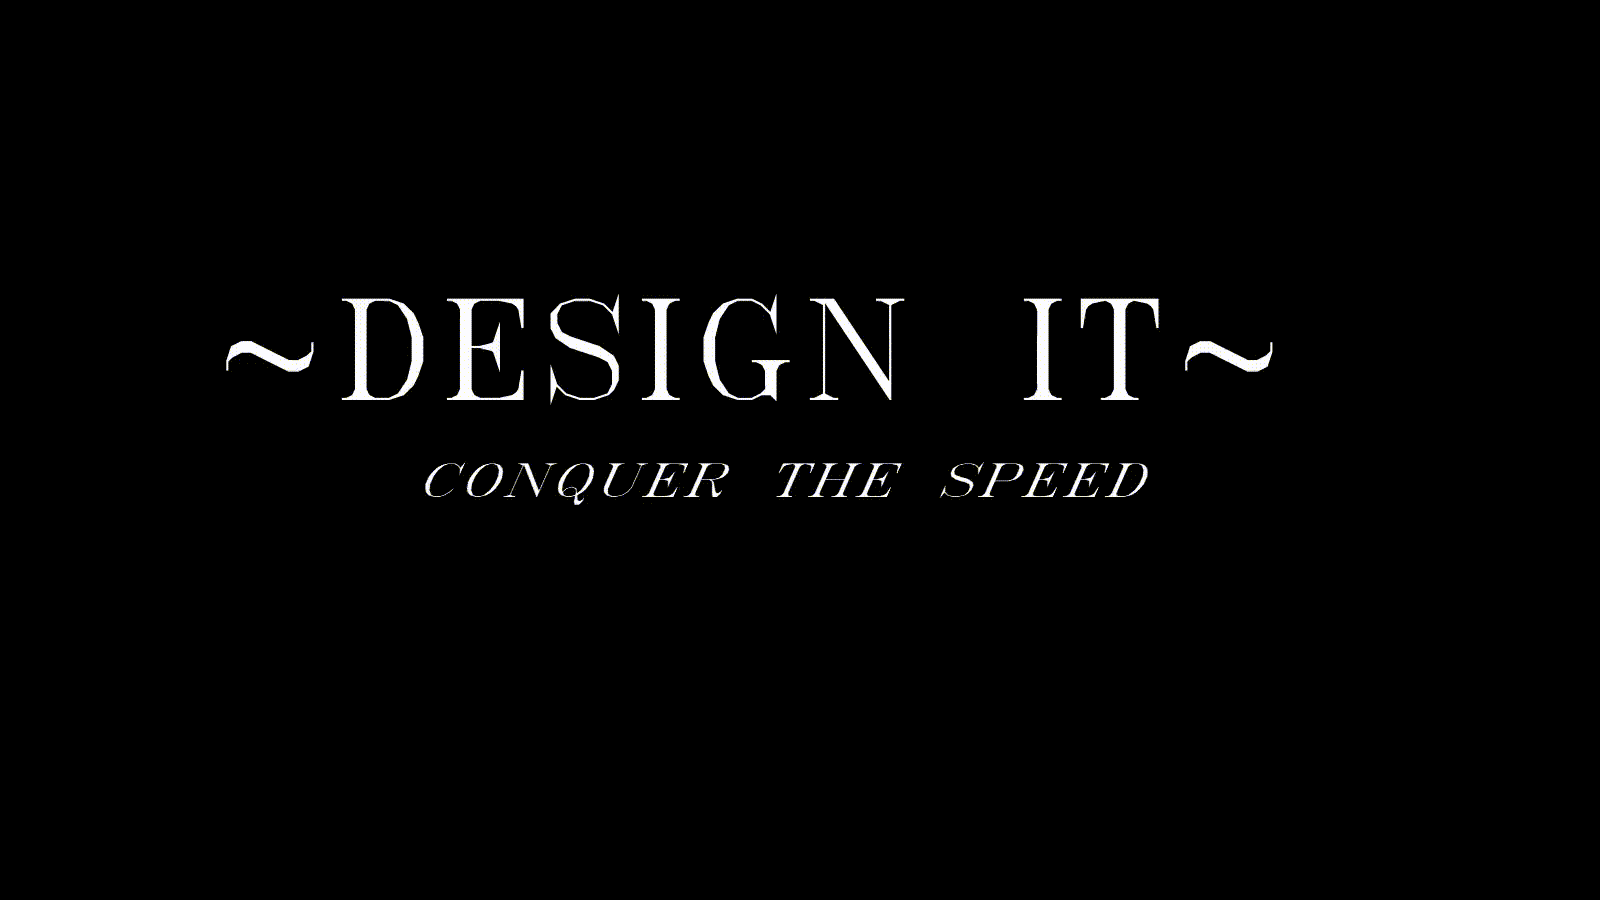 Design It - Conquer The Speed